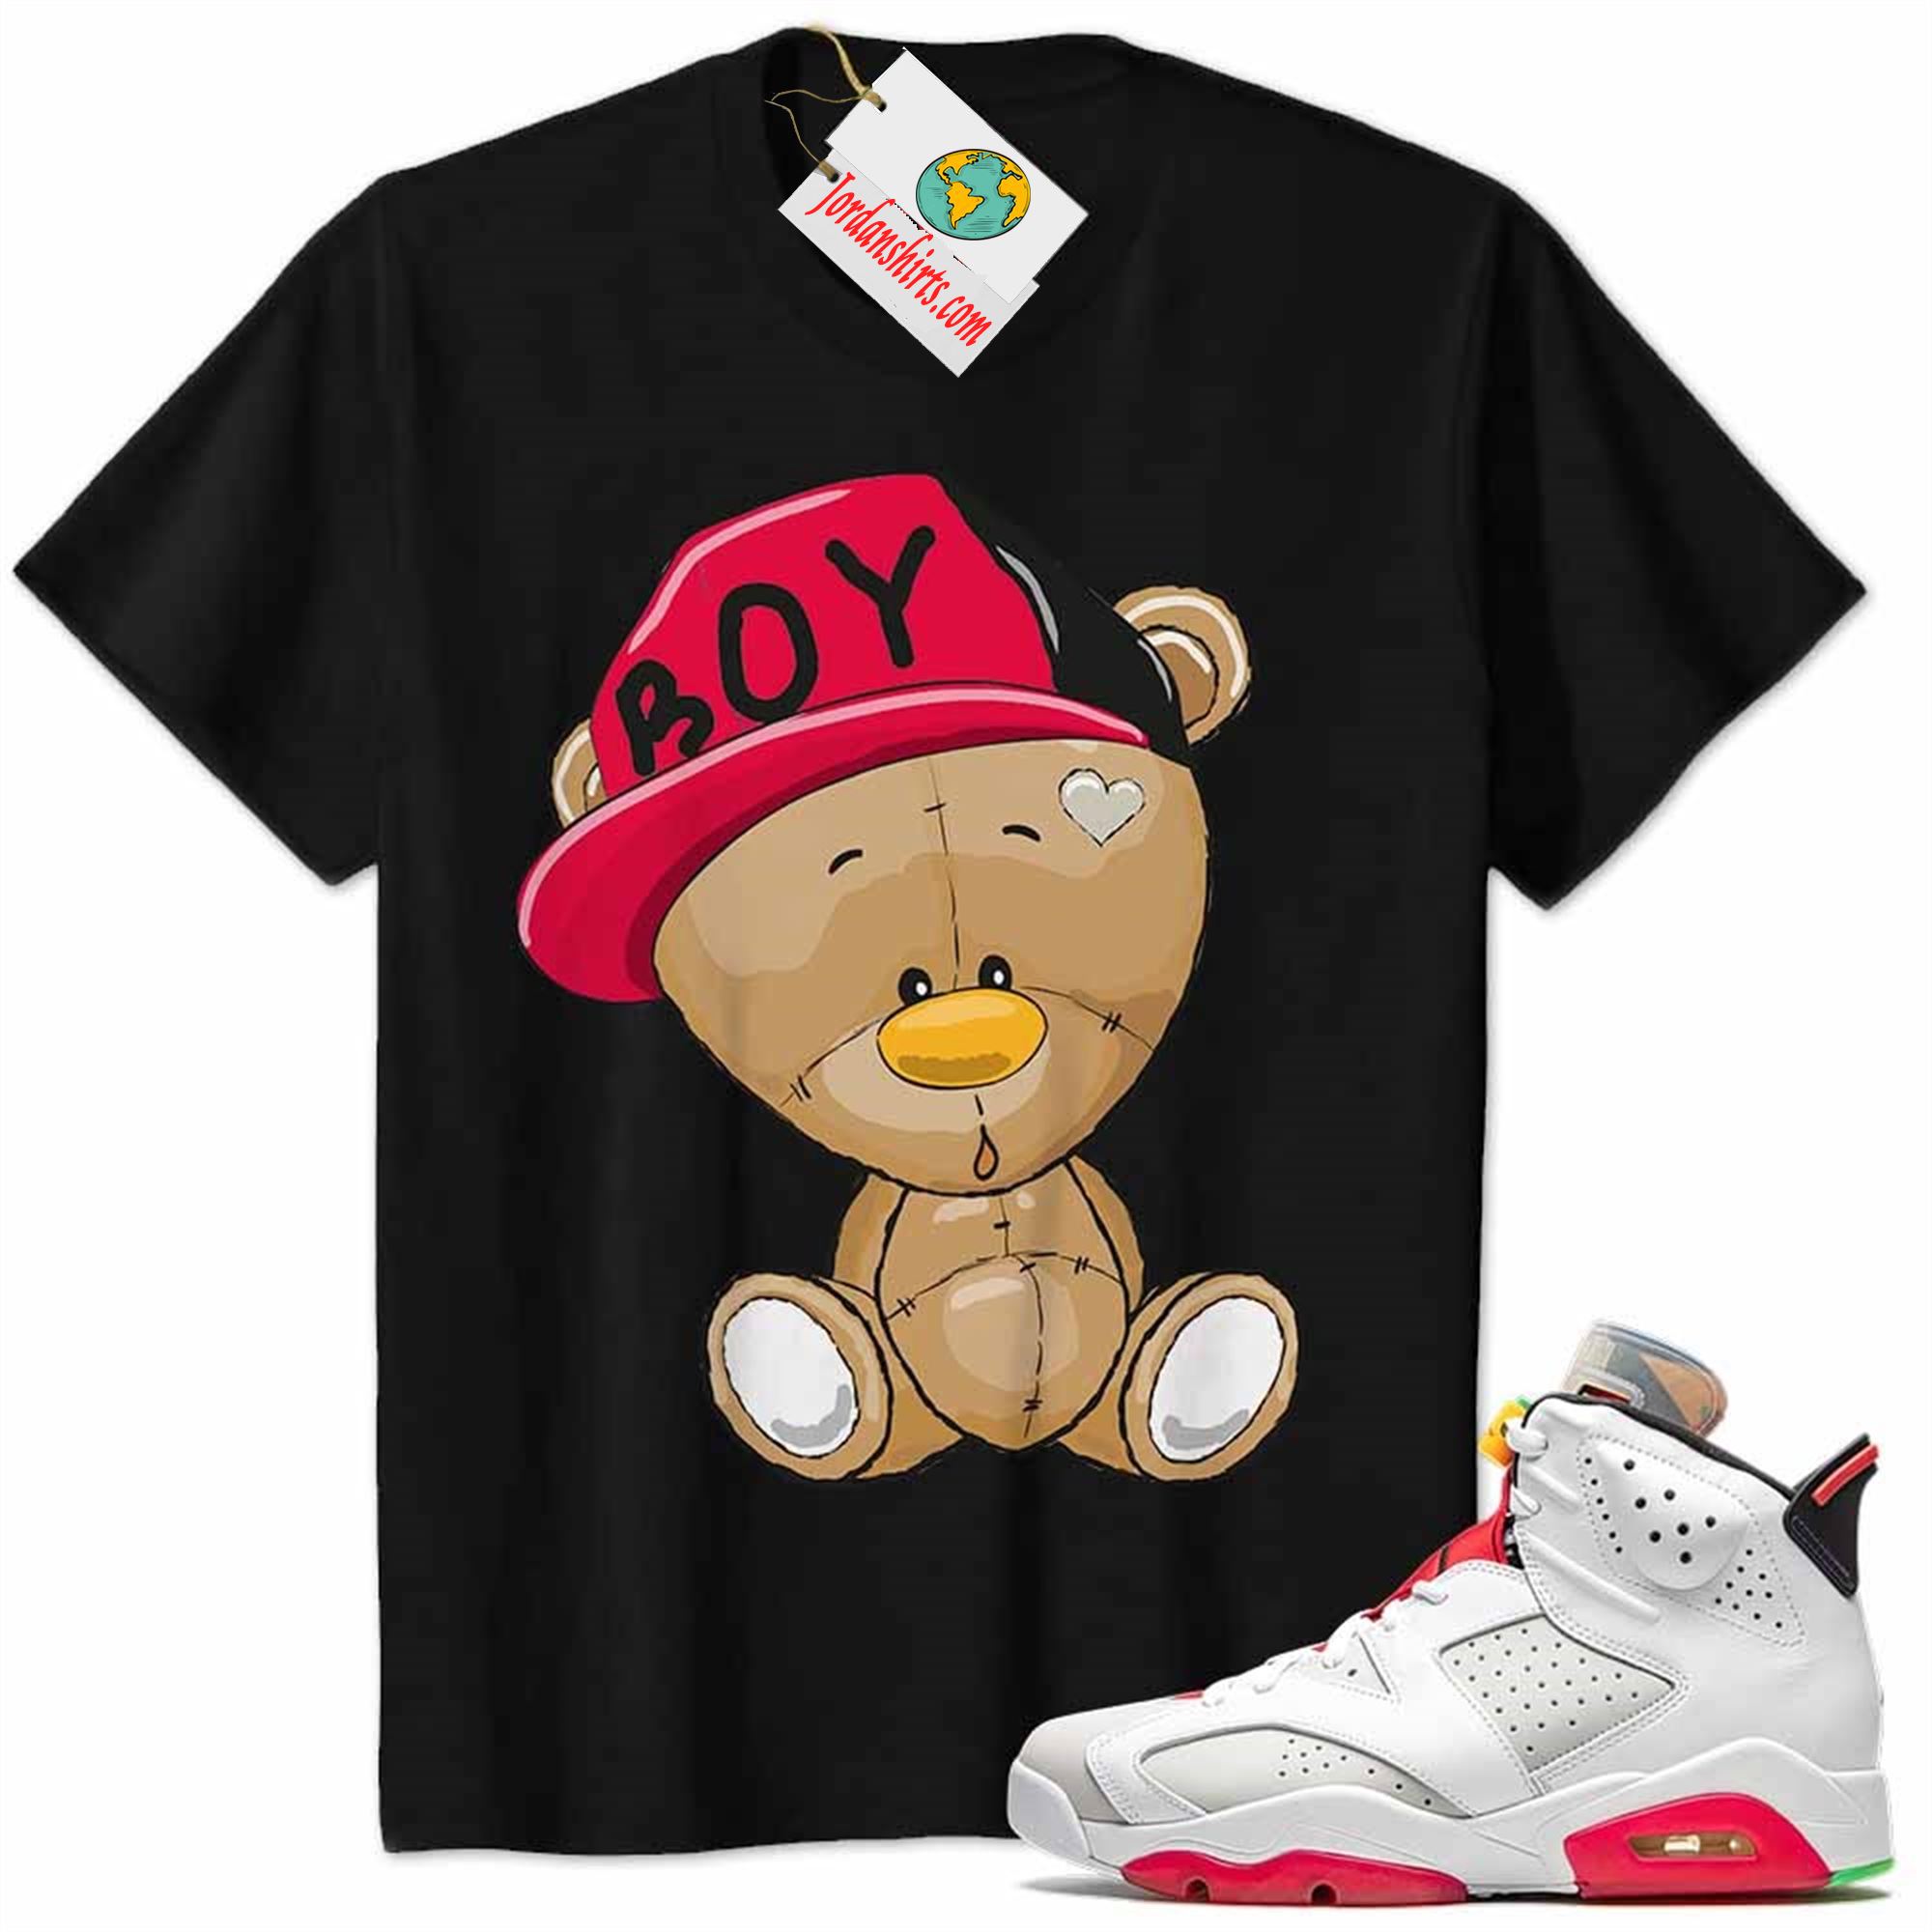 Jordan 6 Shirt, Jordan 6 Hare Shirt Cute Baby Teddy Bear Black Size Up To 5xl